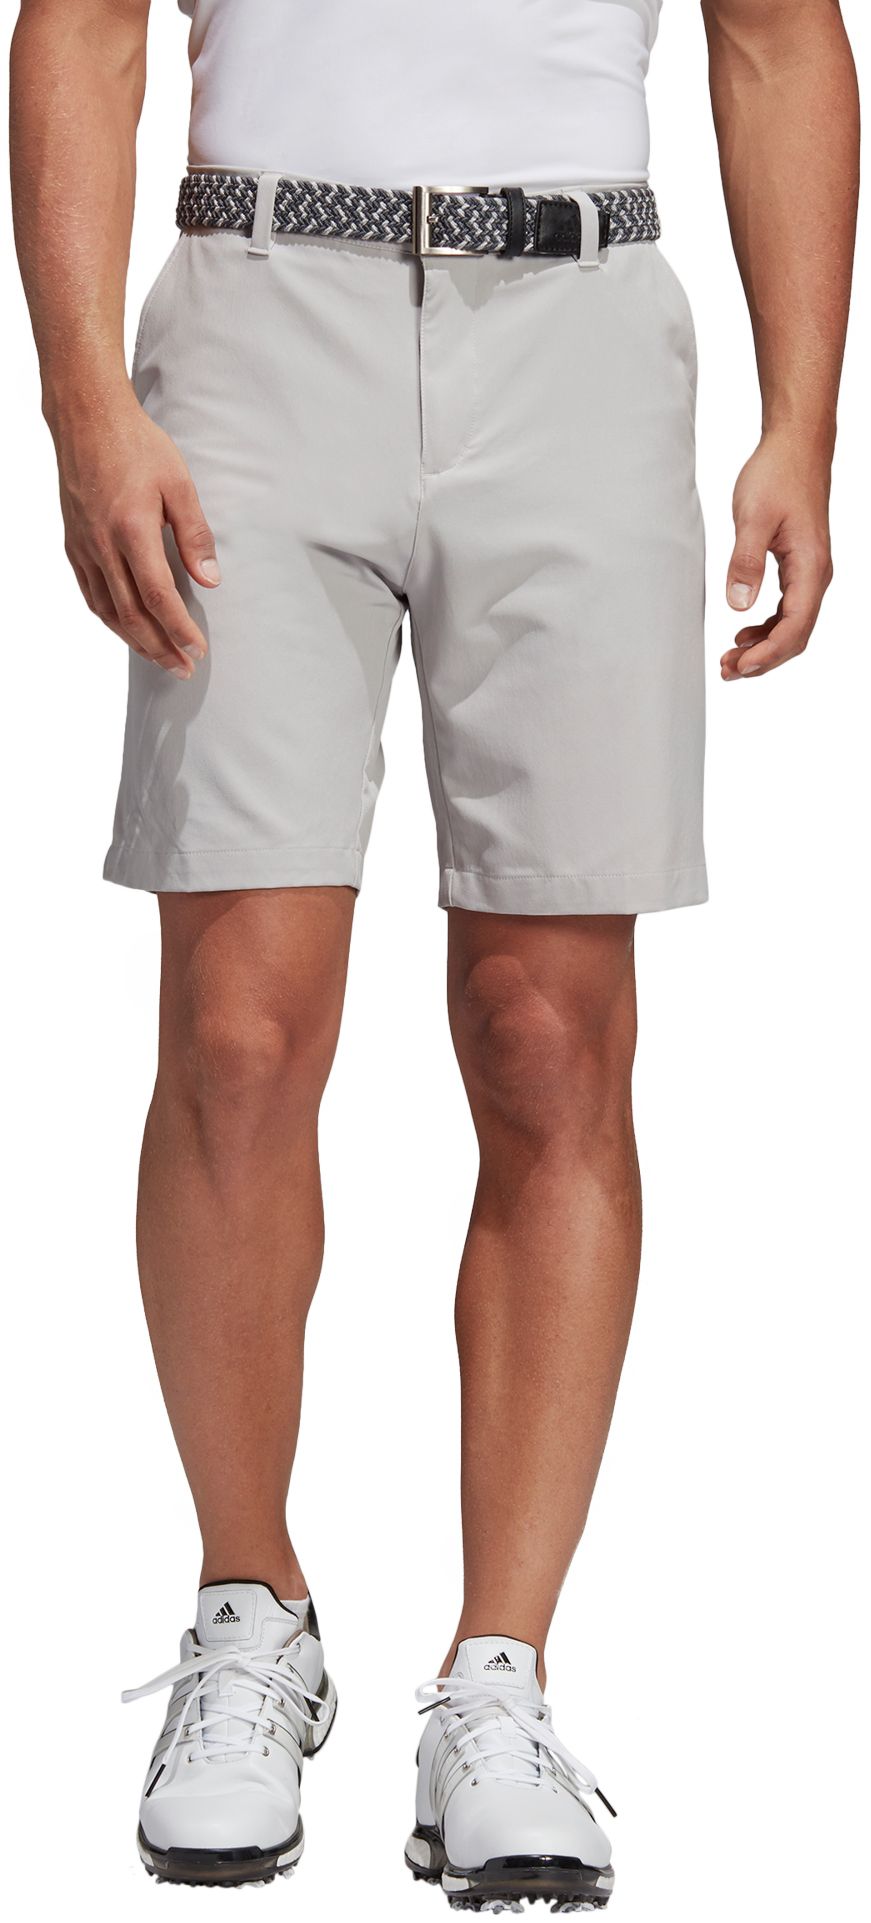 adidas 365 golf shorts